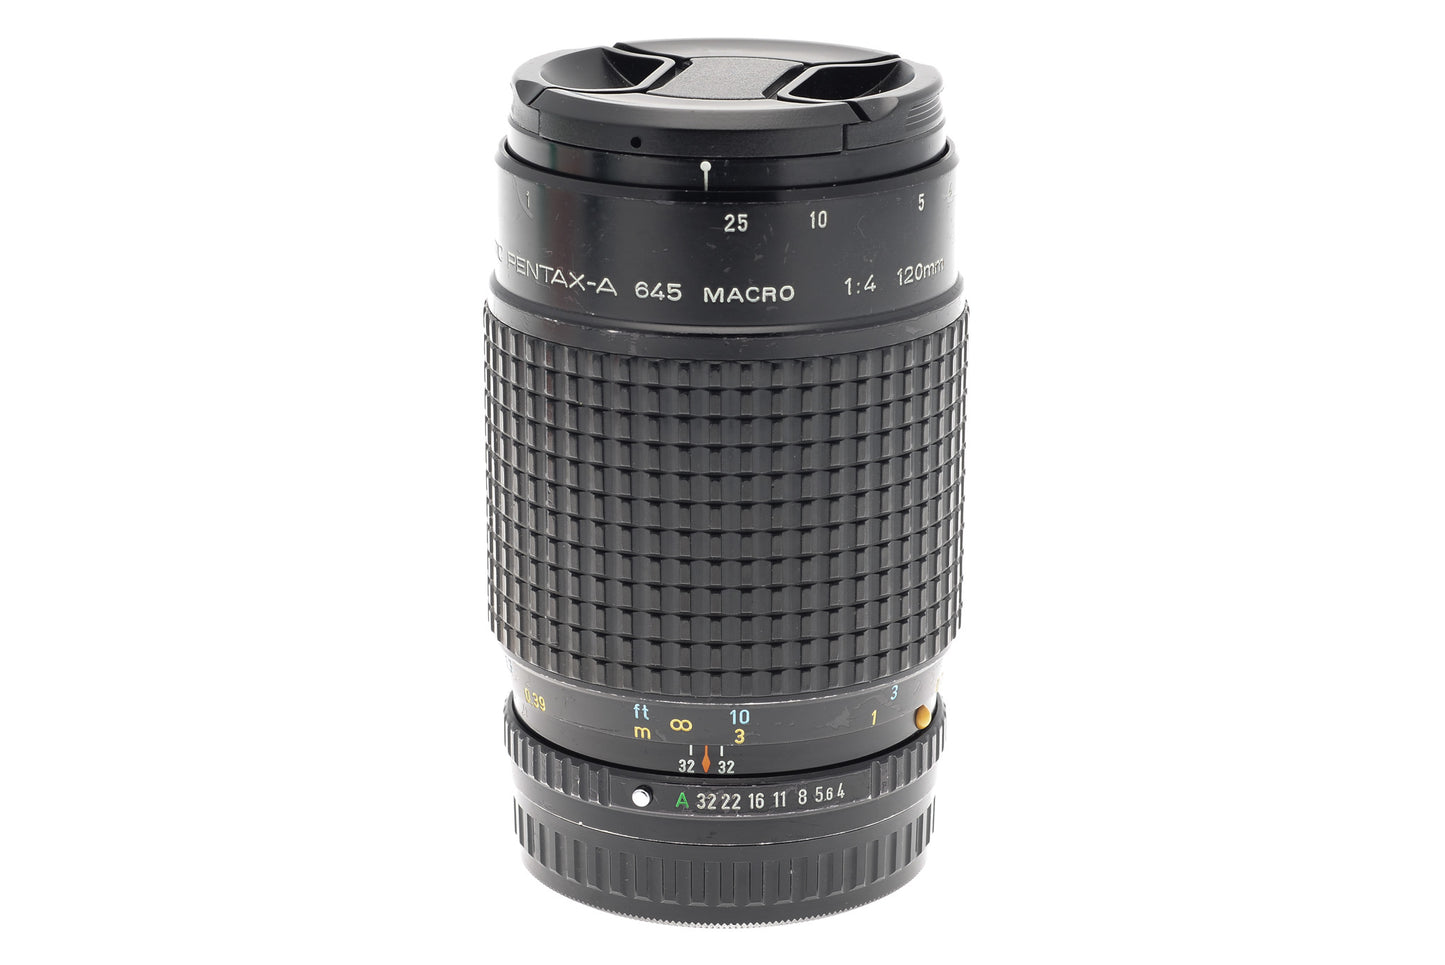 Pentax 120mm f4 SMC Pentax-A Macro - Lens